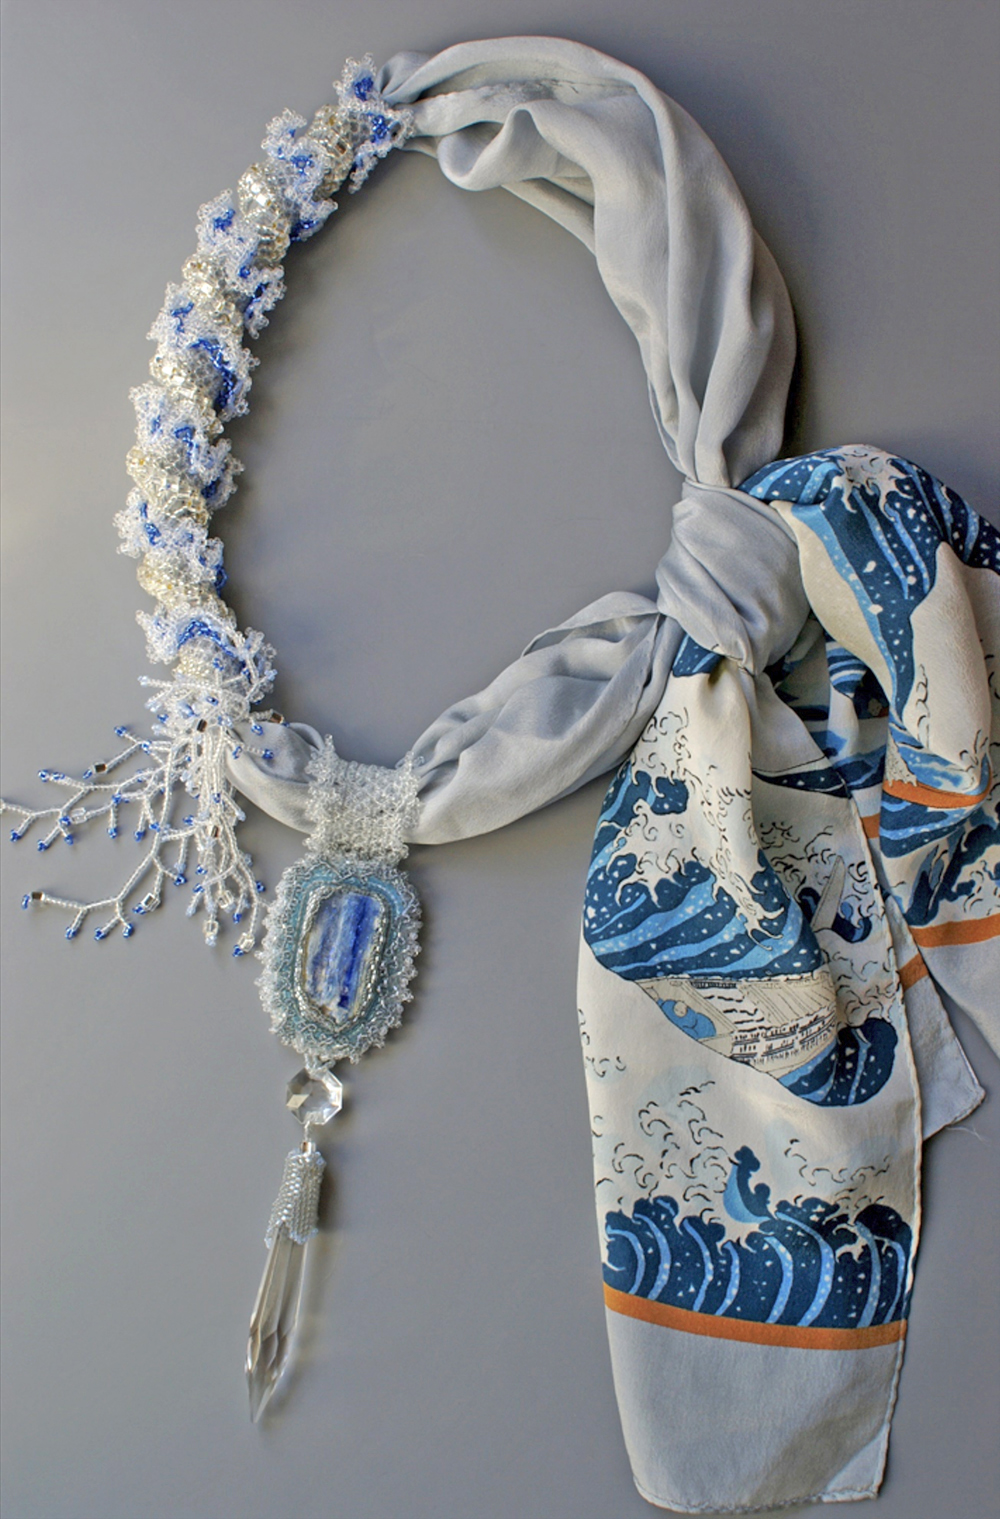 "Urami Bushi" inspired jewelry by Tatiana Van Iten